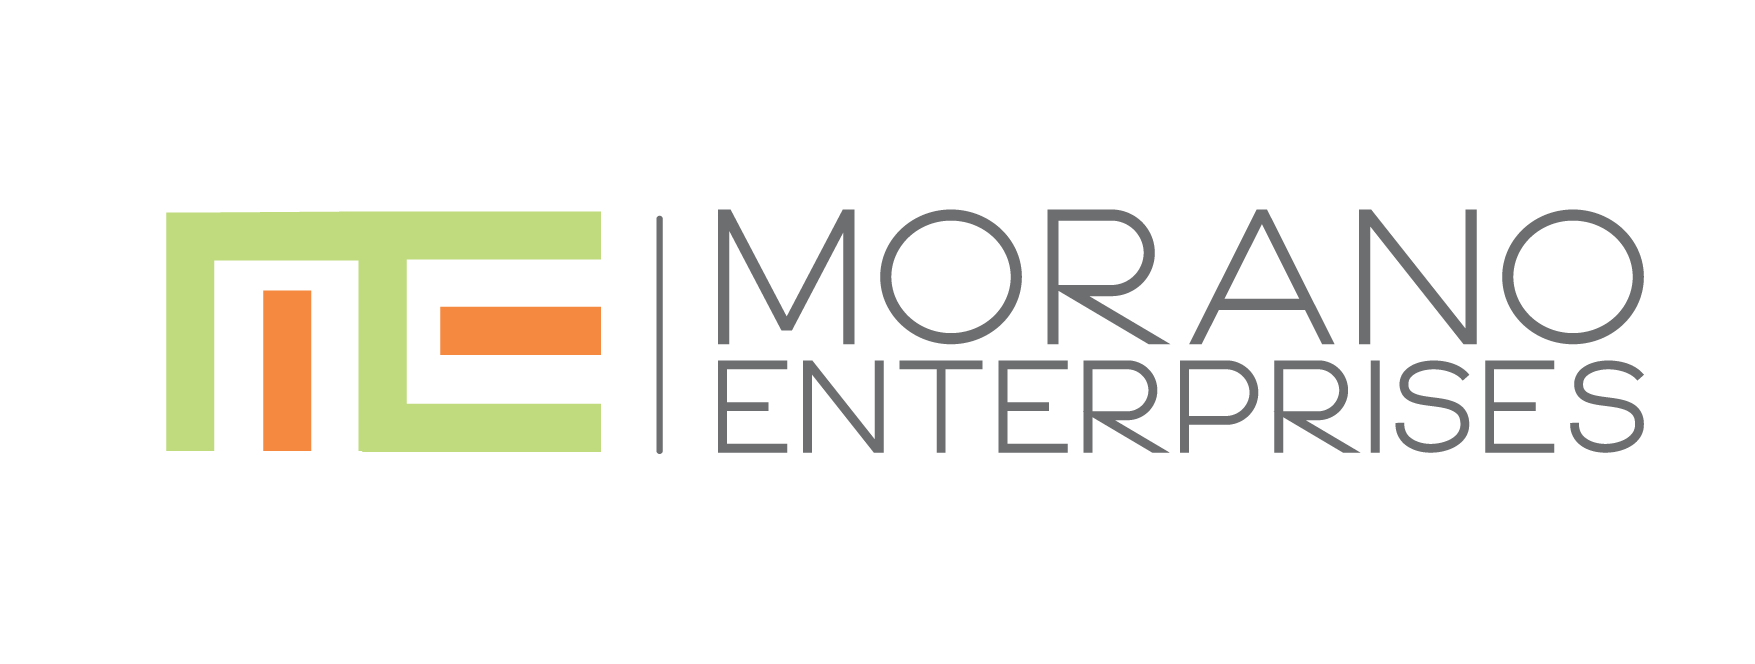 Morano Enterprises LTD.